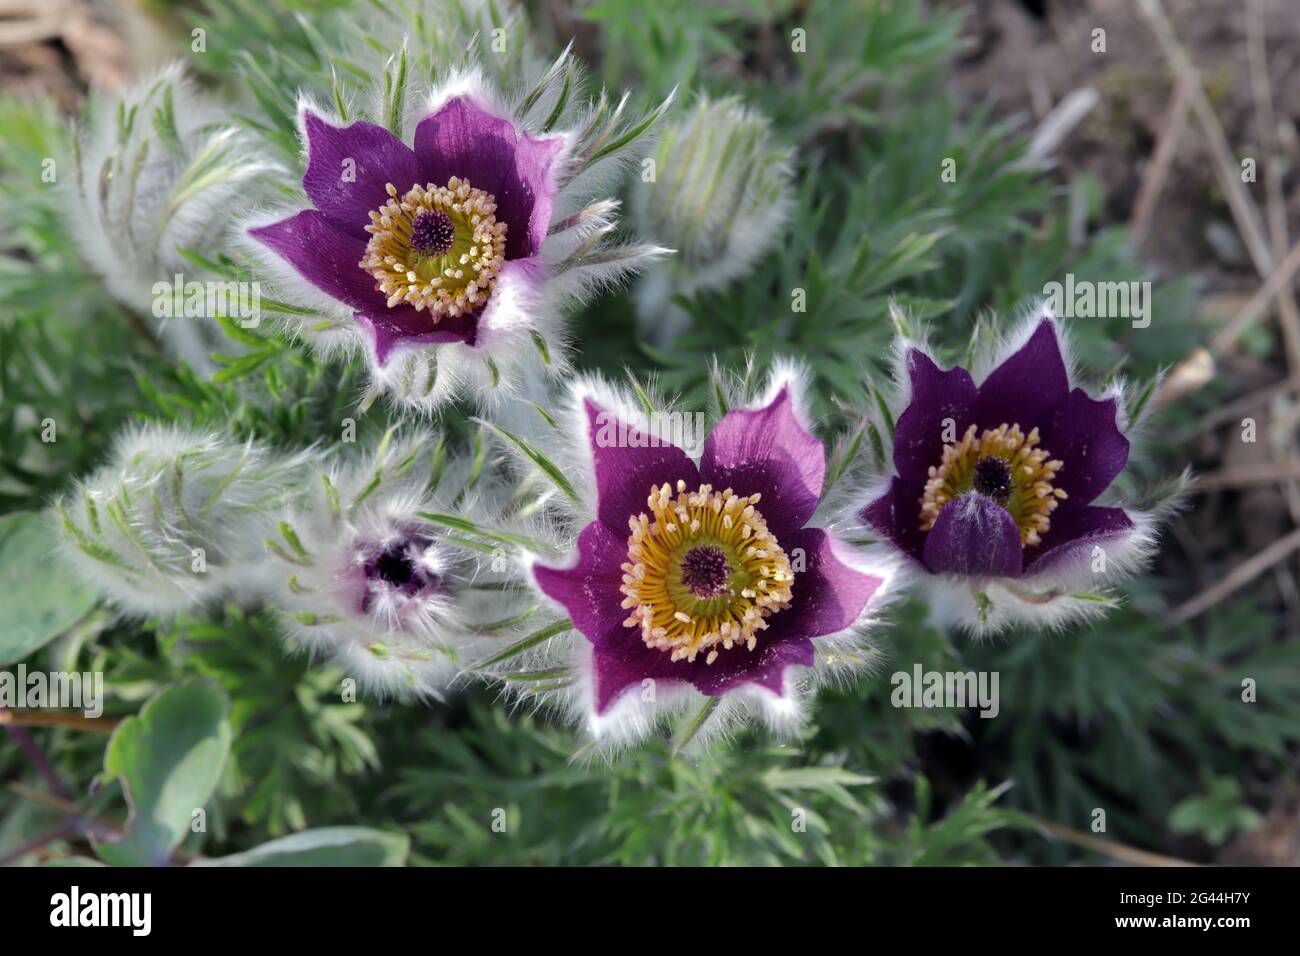 Pasque flower (Pulsatilla vulgaris), flowering plant in spring Stock Photo